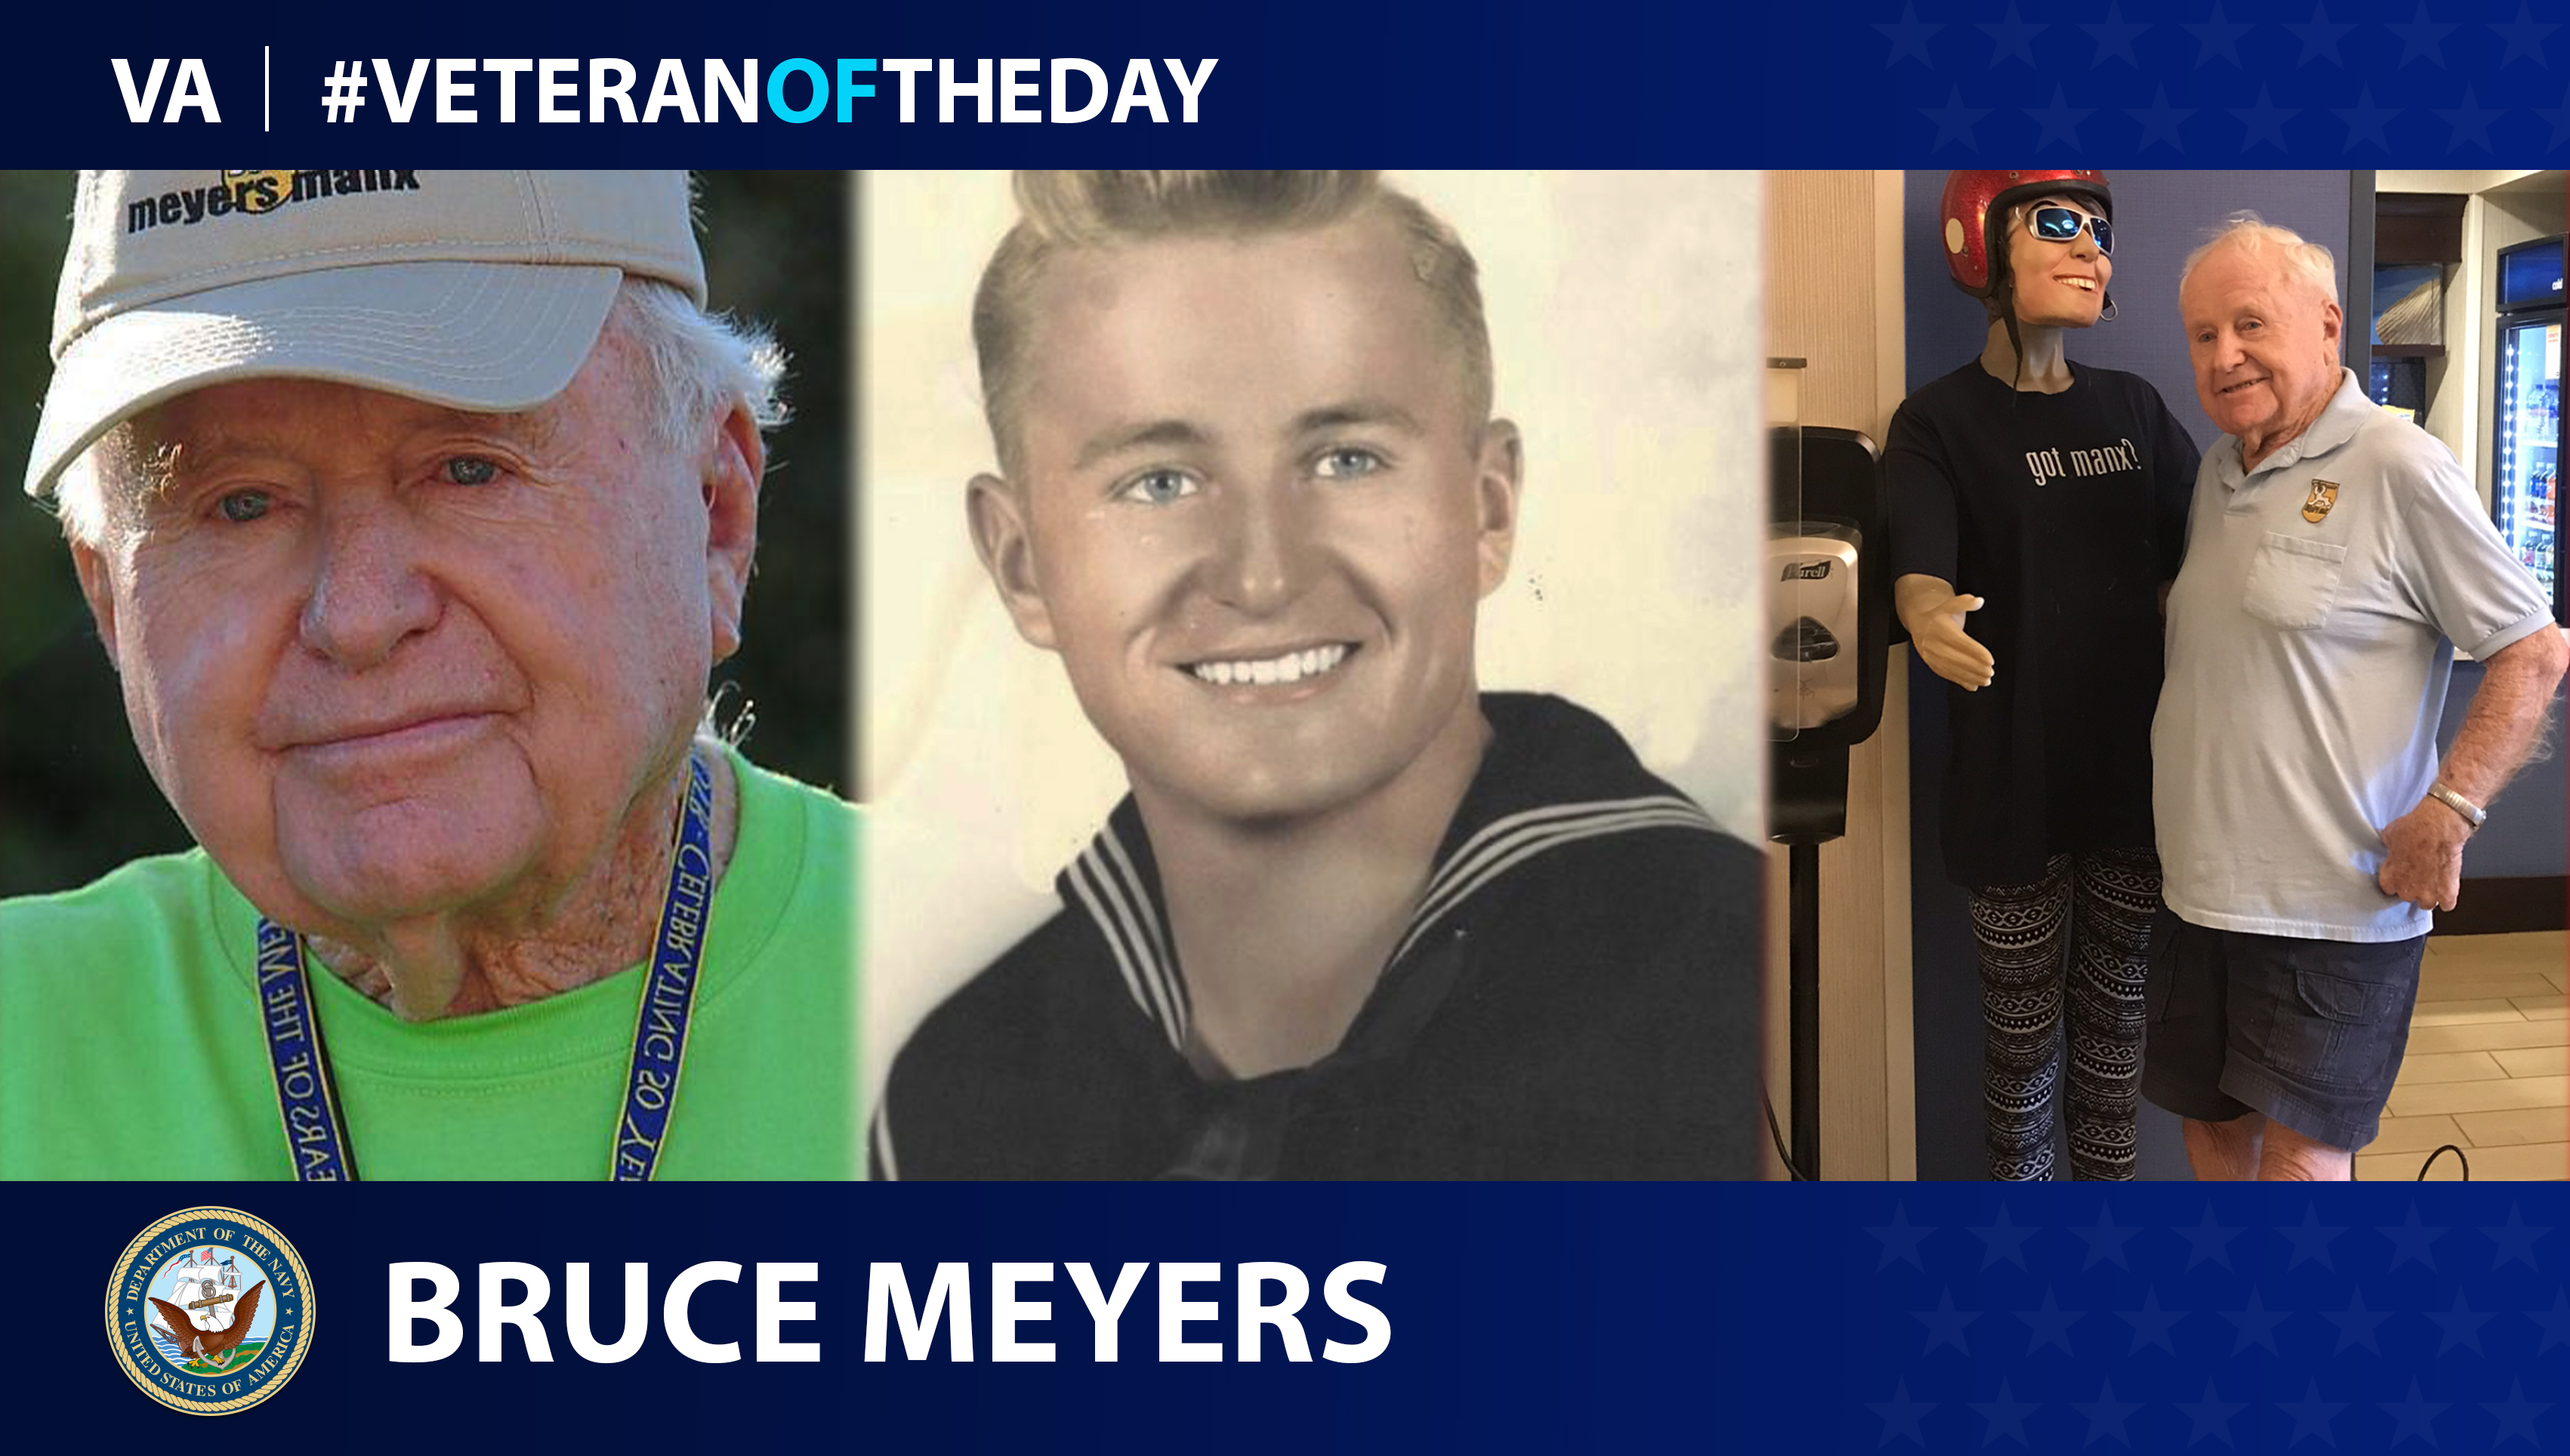 Navy Veteran Bruce Meyers is today's Veteran of the day.